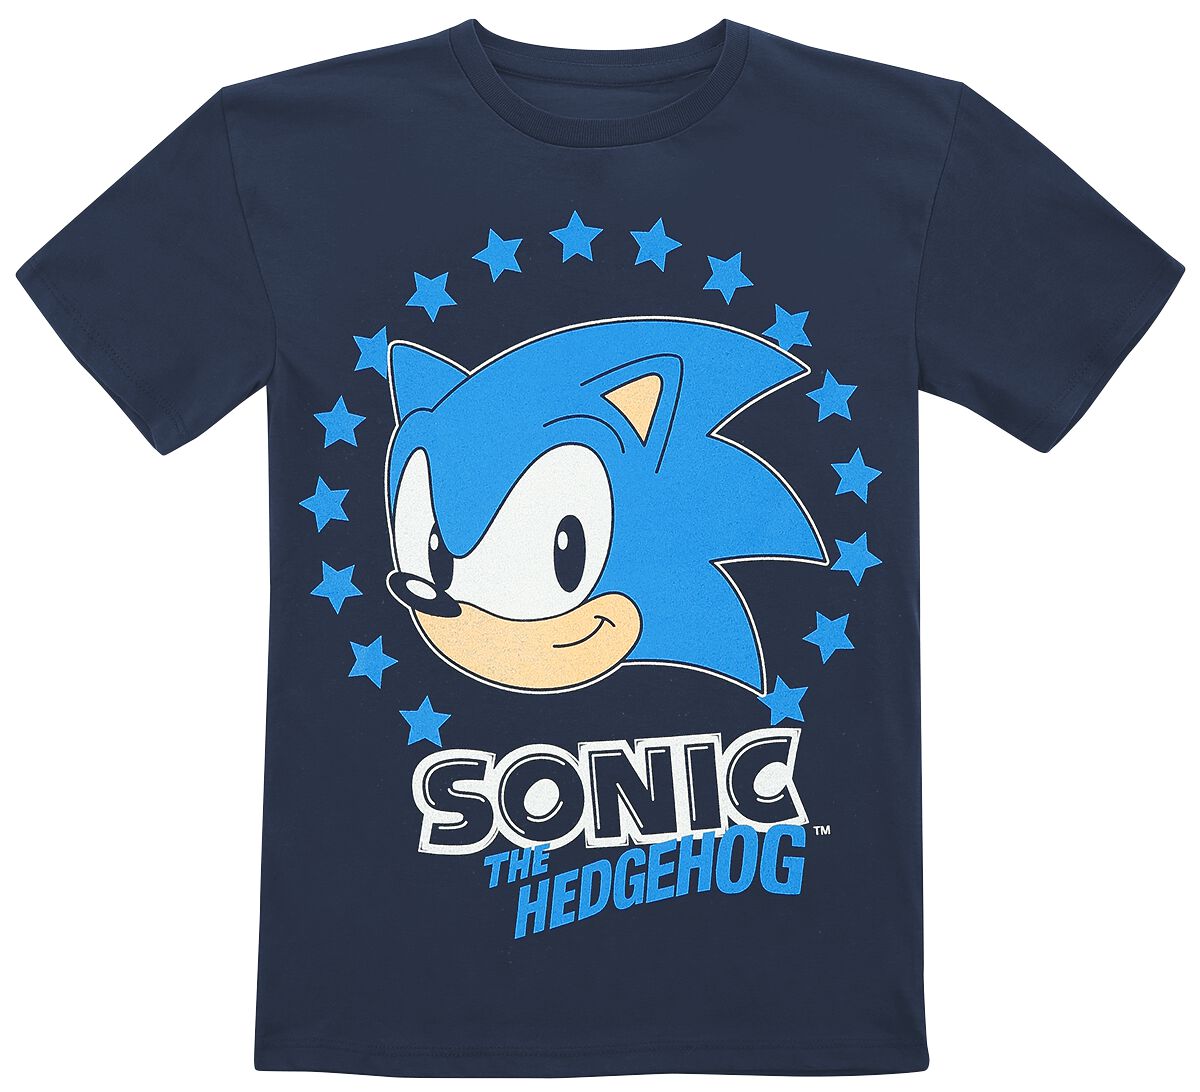 Sonic The Hedgehog Kids - Stars T-Shirt blau in 140